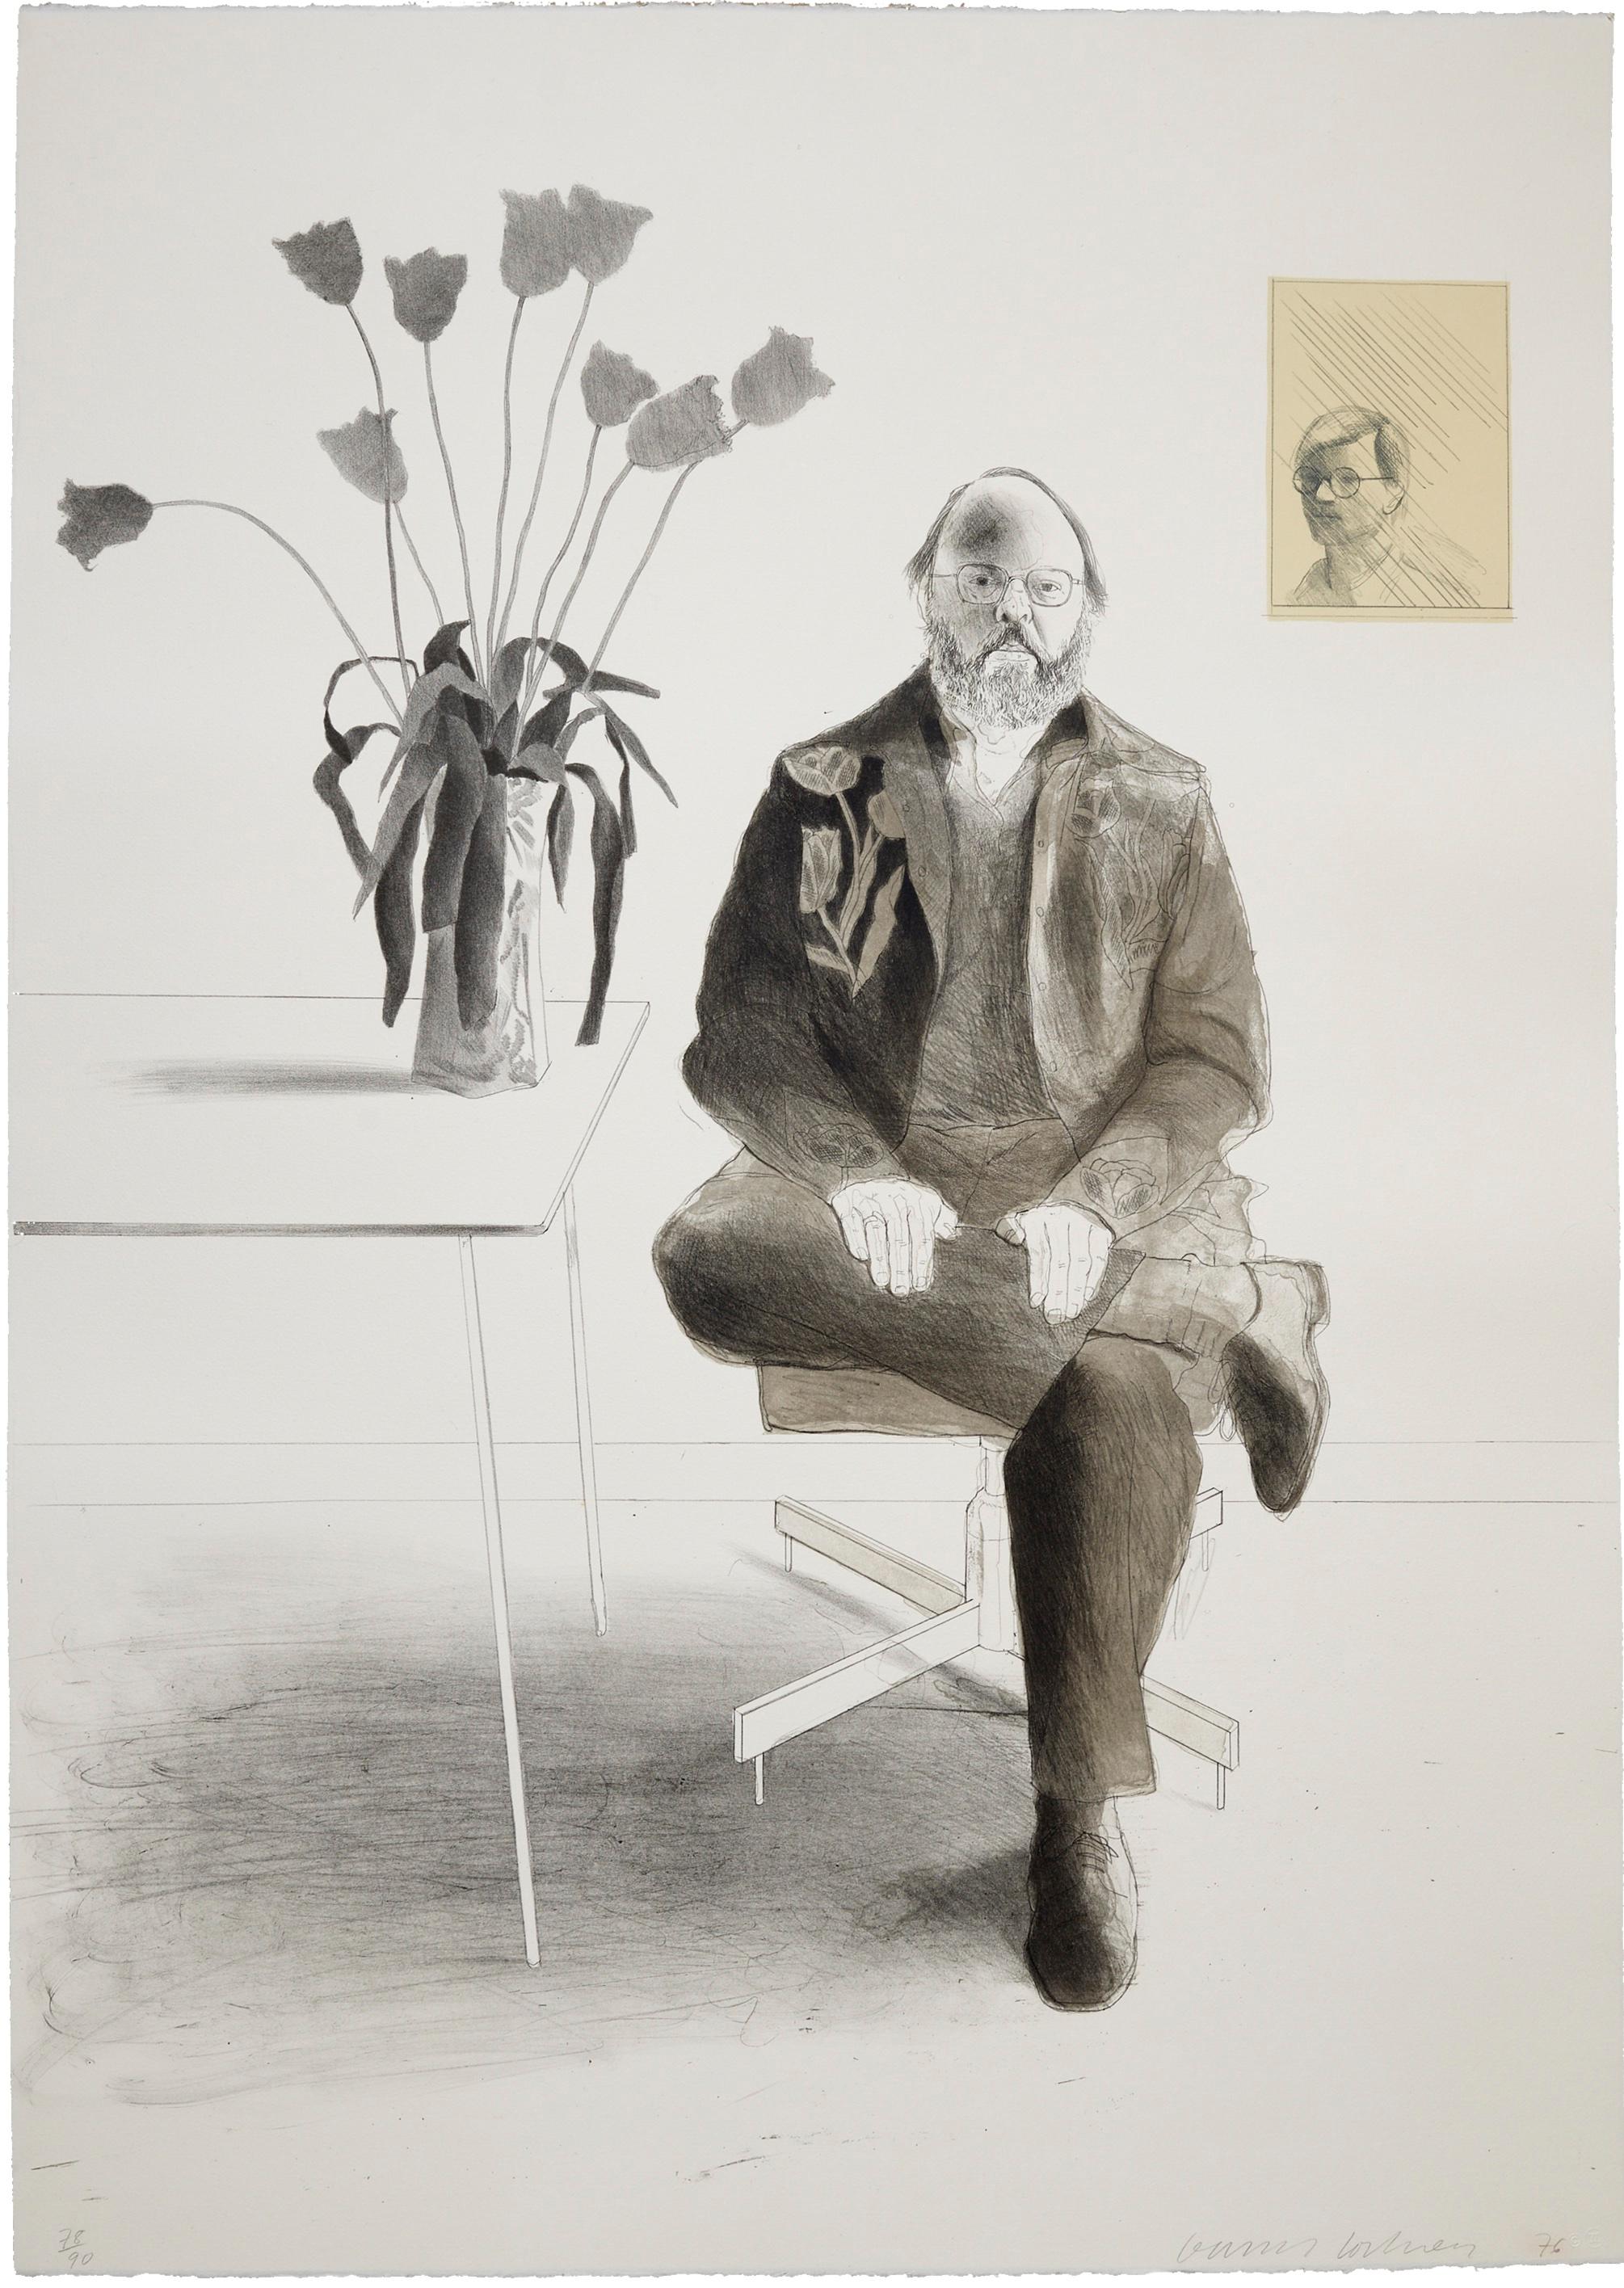 Henry assis avec des tulipes - Lithographie de David Hockney